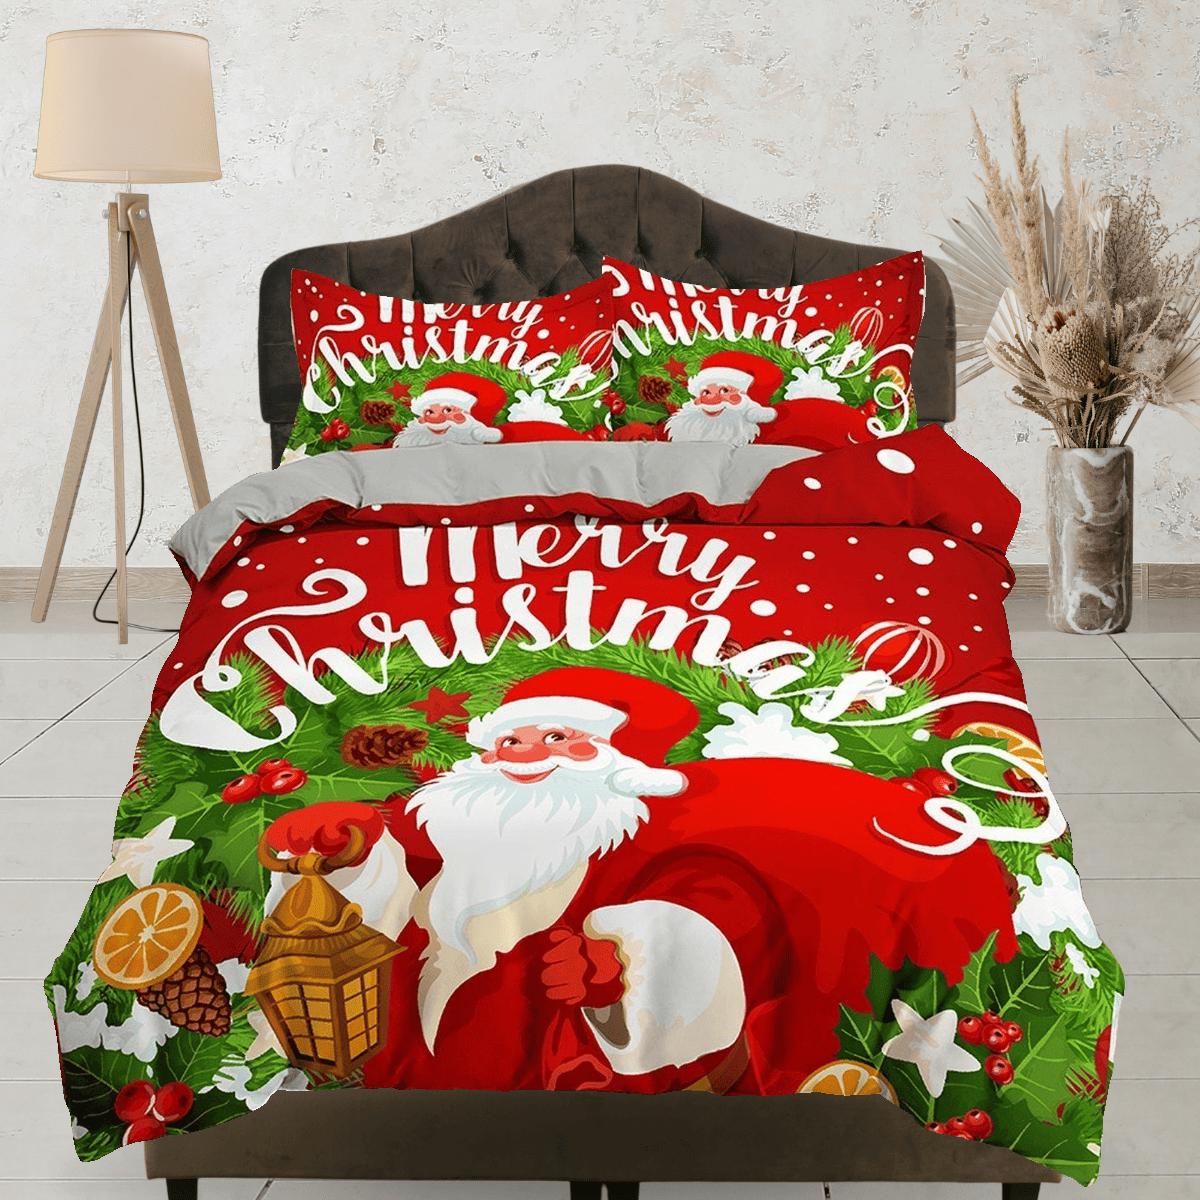 daintyduvet Merry Christmas Santa Claus bedding & pillowcase holiday gift red duvet cover king queen twin toddler bedding baby Christmas farmhouse decor